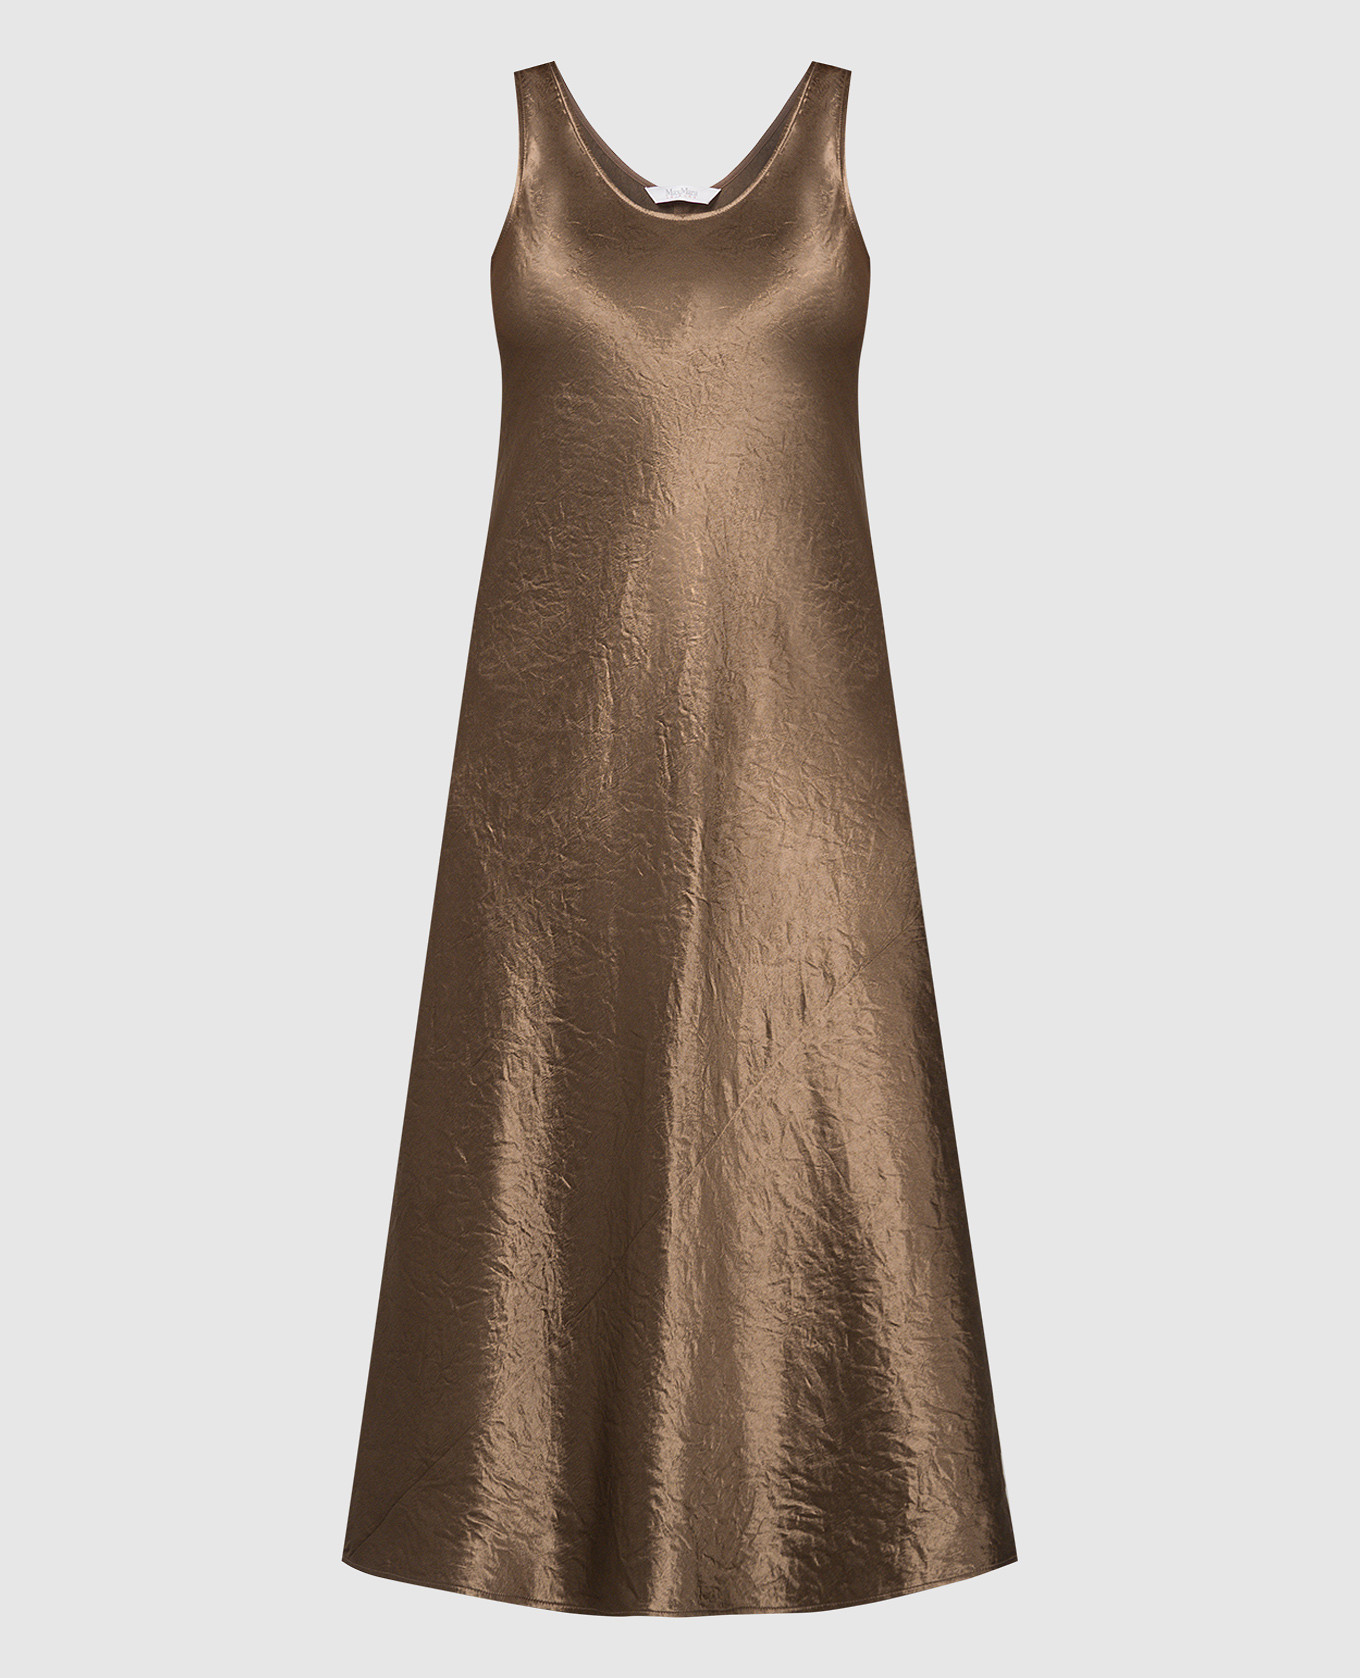 TALETE brown dress